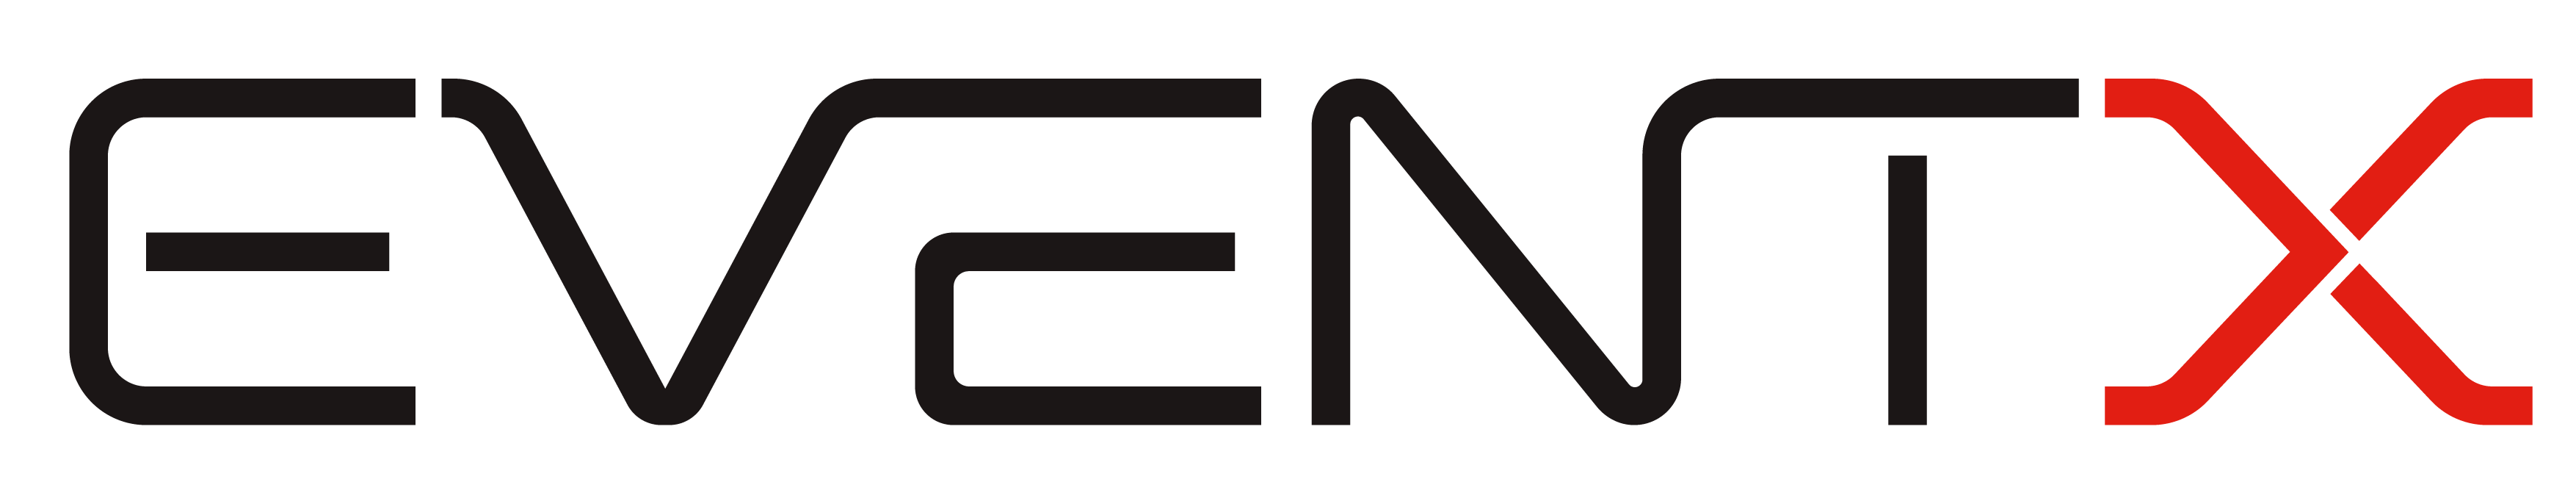 EventX Logo